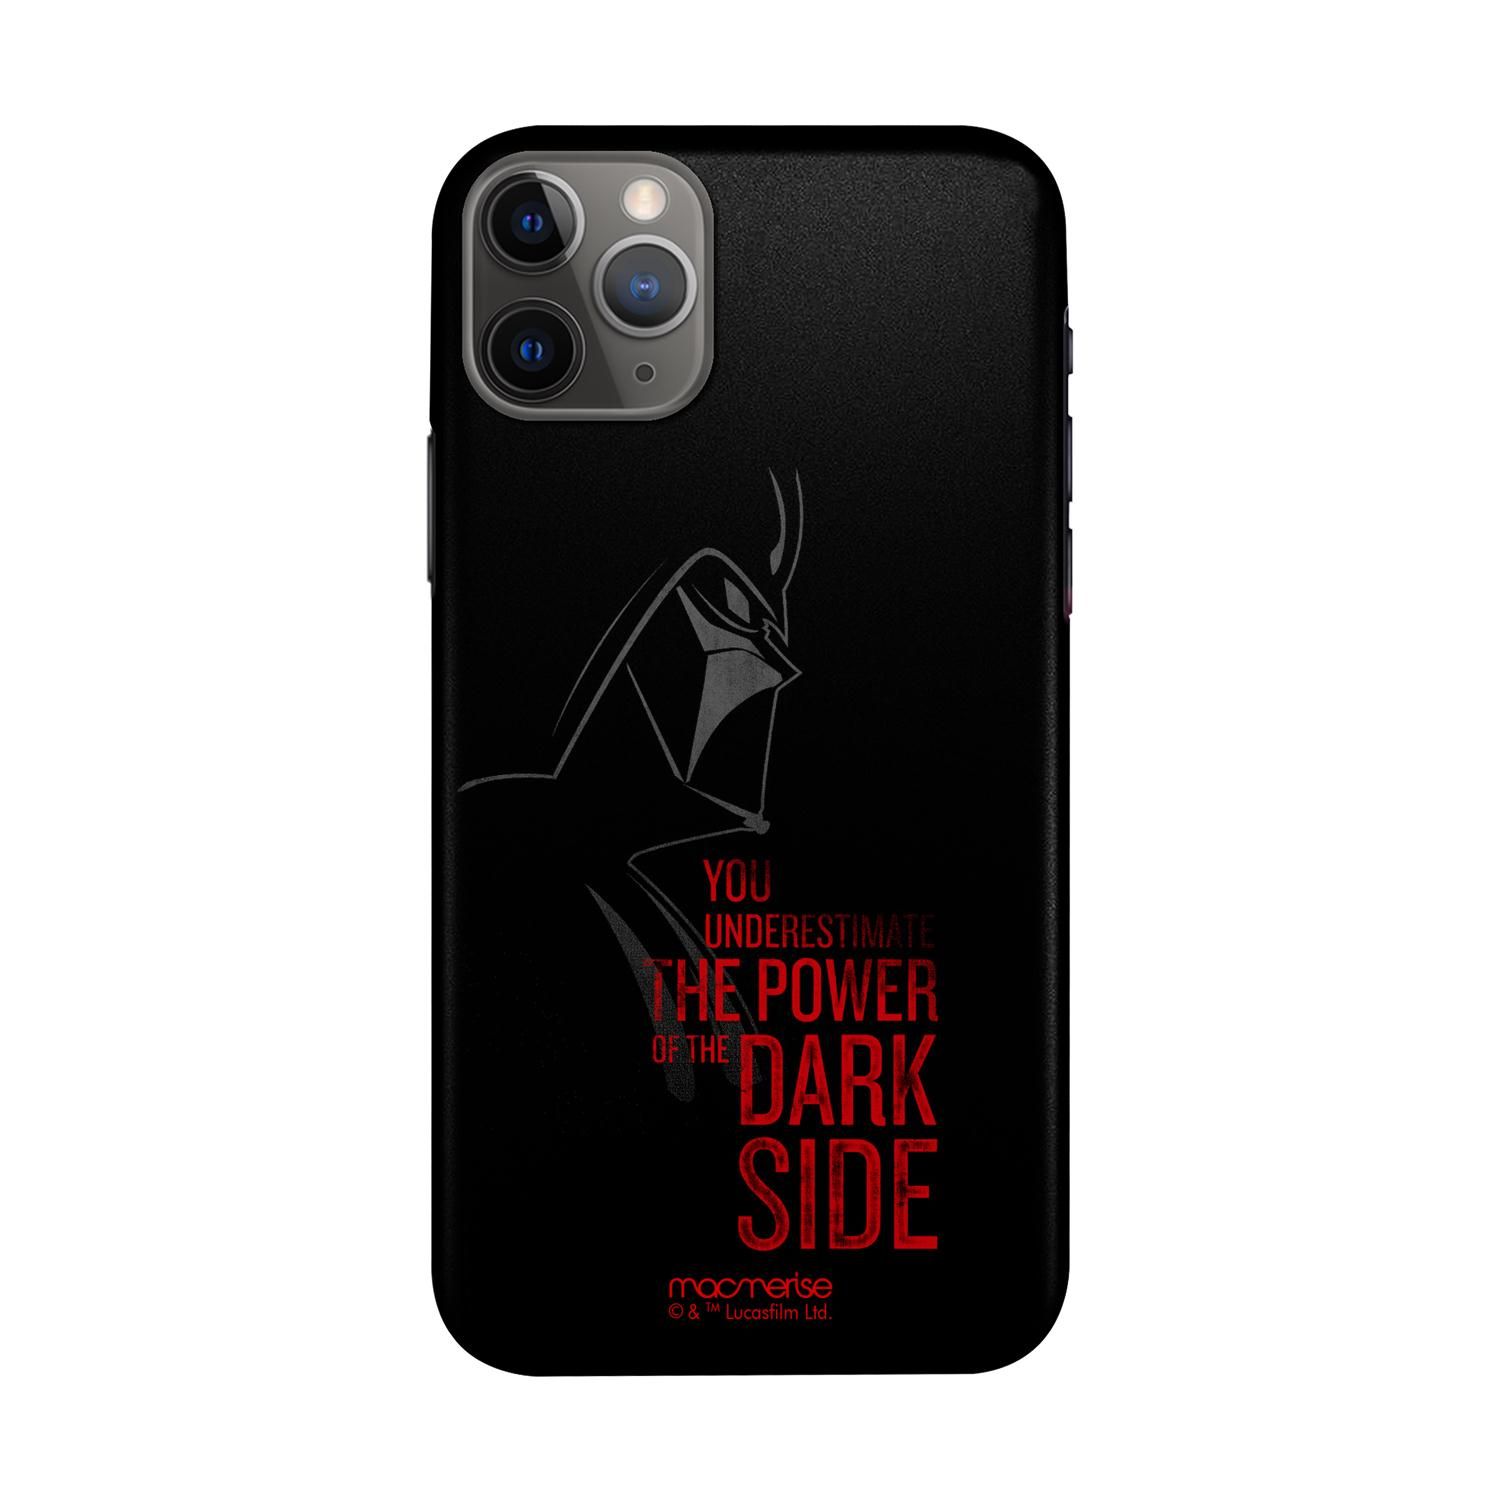 Buy The Dark Side - Sleek Phone Case for iPhone 11 Pro Online